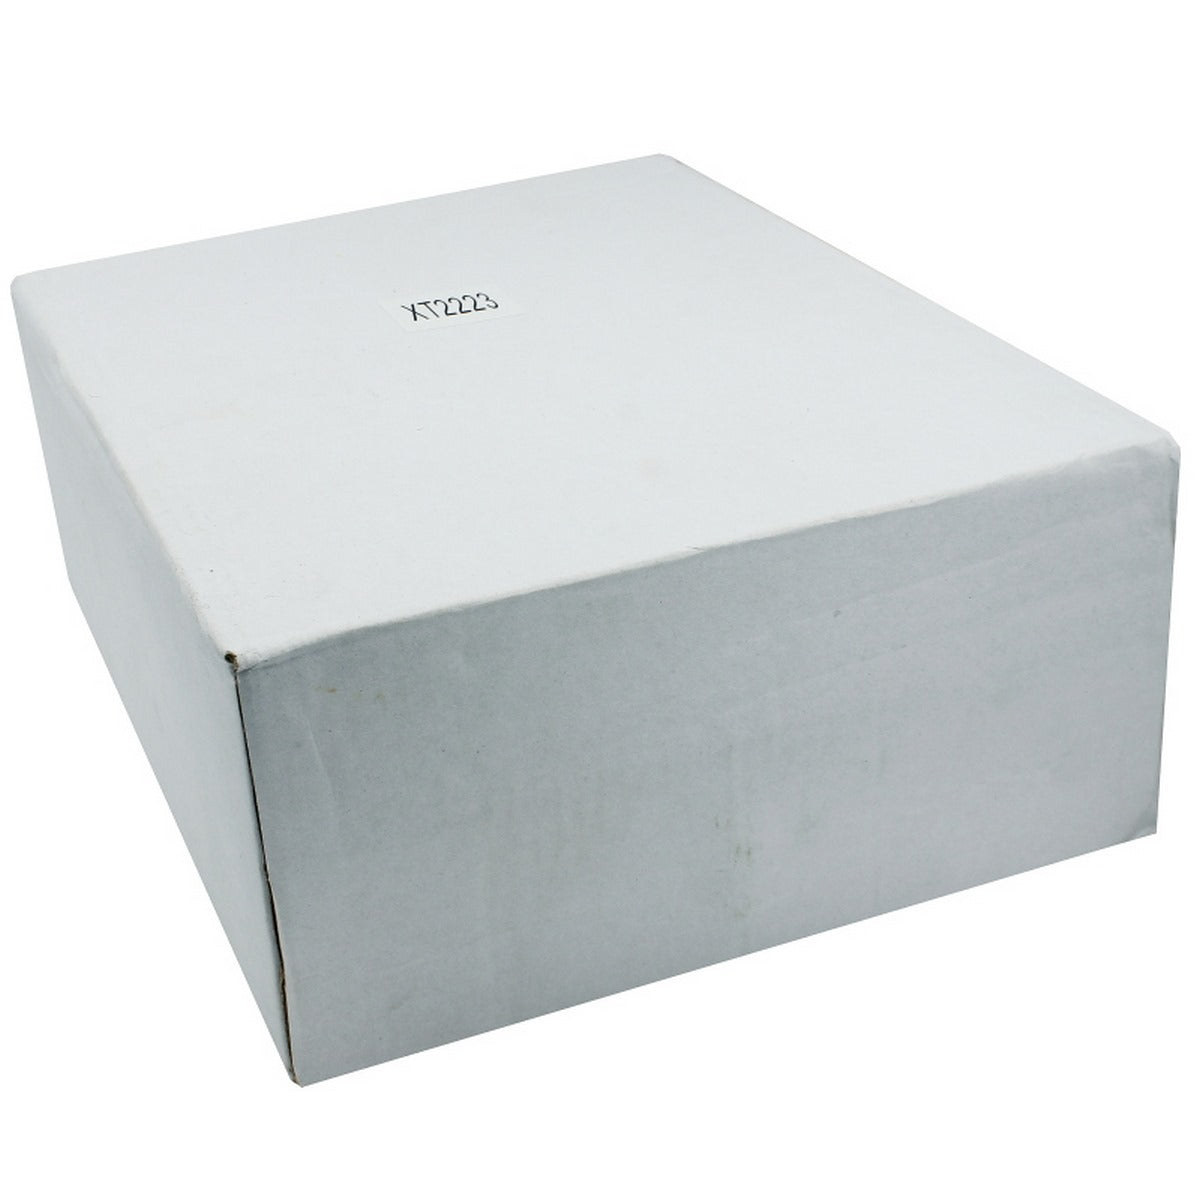 jags-mumbai Wooden Box Wooden Empty Box 3pcs White With Miror XT2223